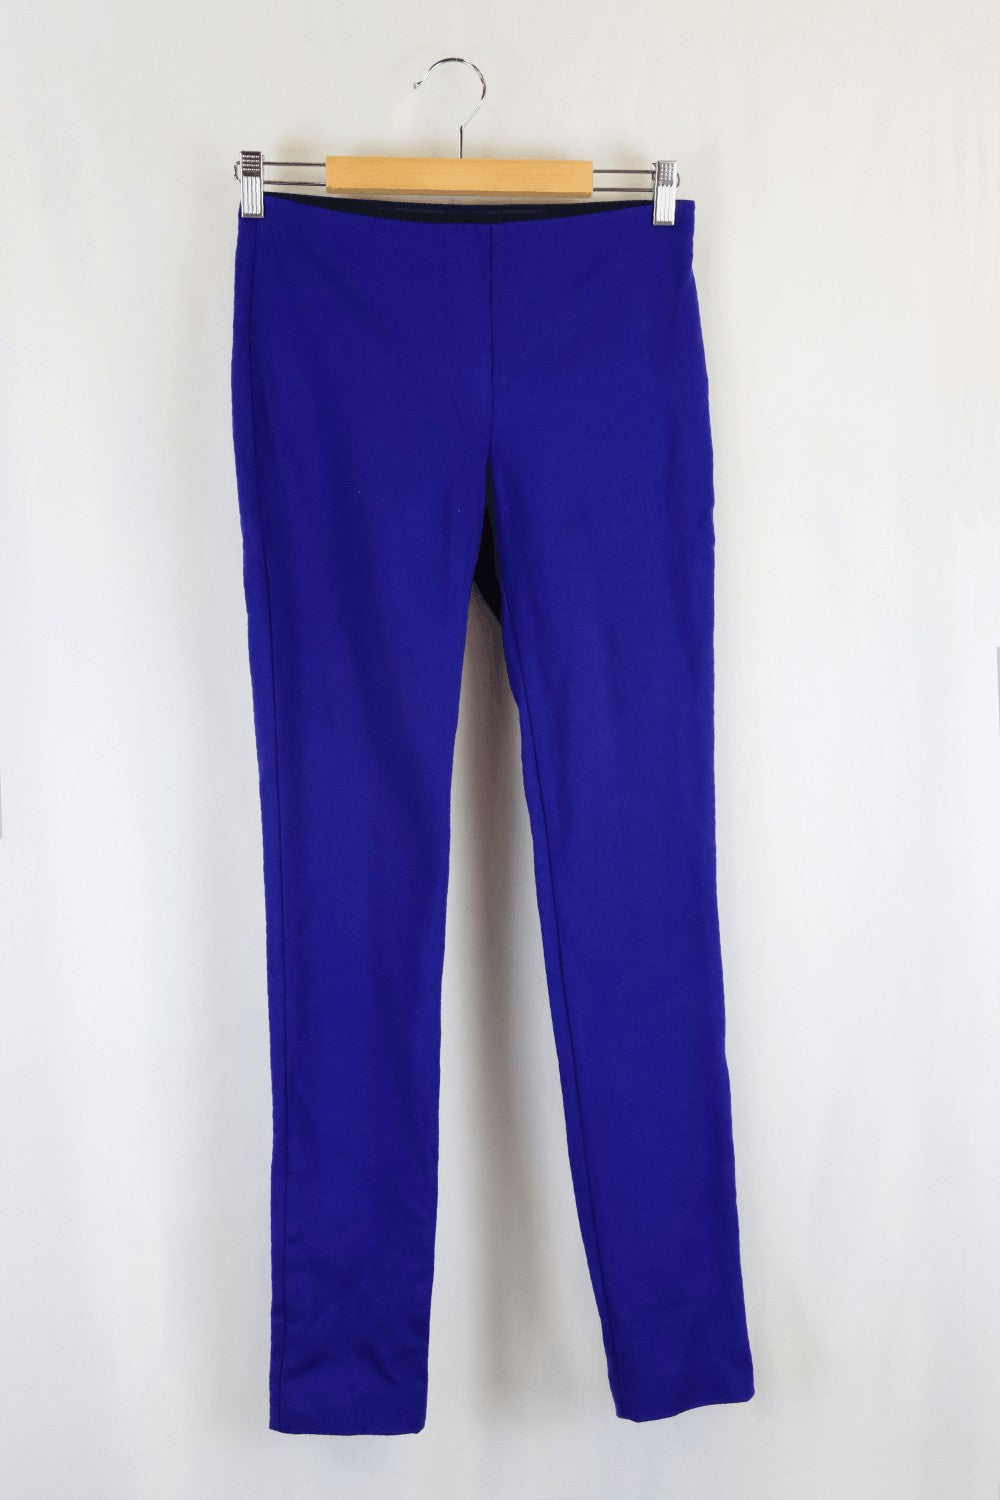 Missoni Blue Pants 40 (10)